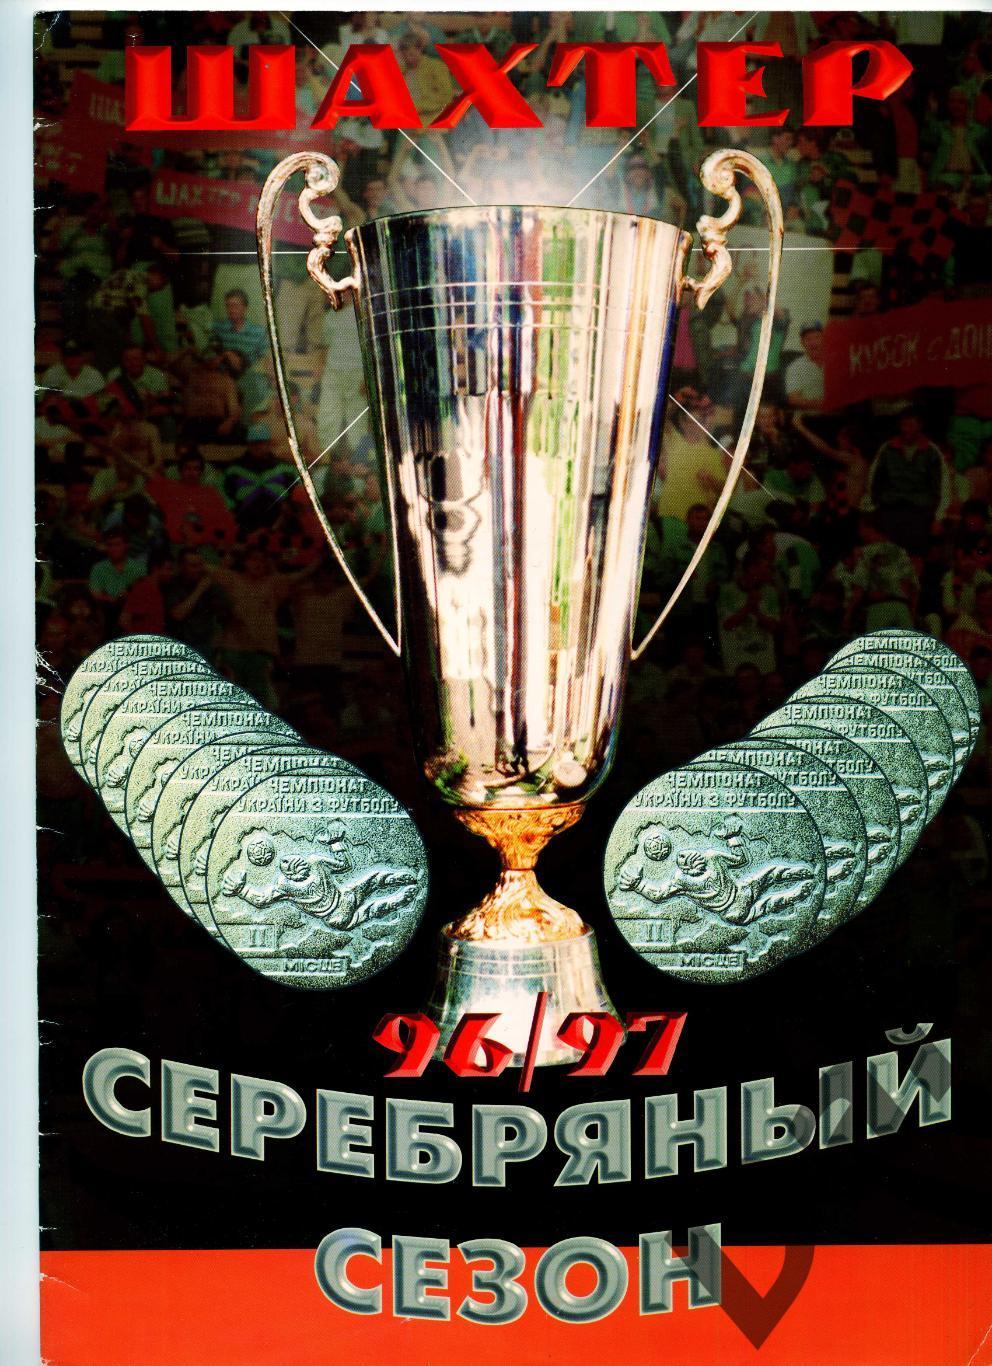 Шахтер (Донецк) Серебряный сезон 96/97